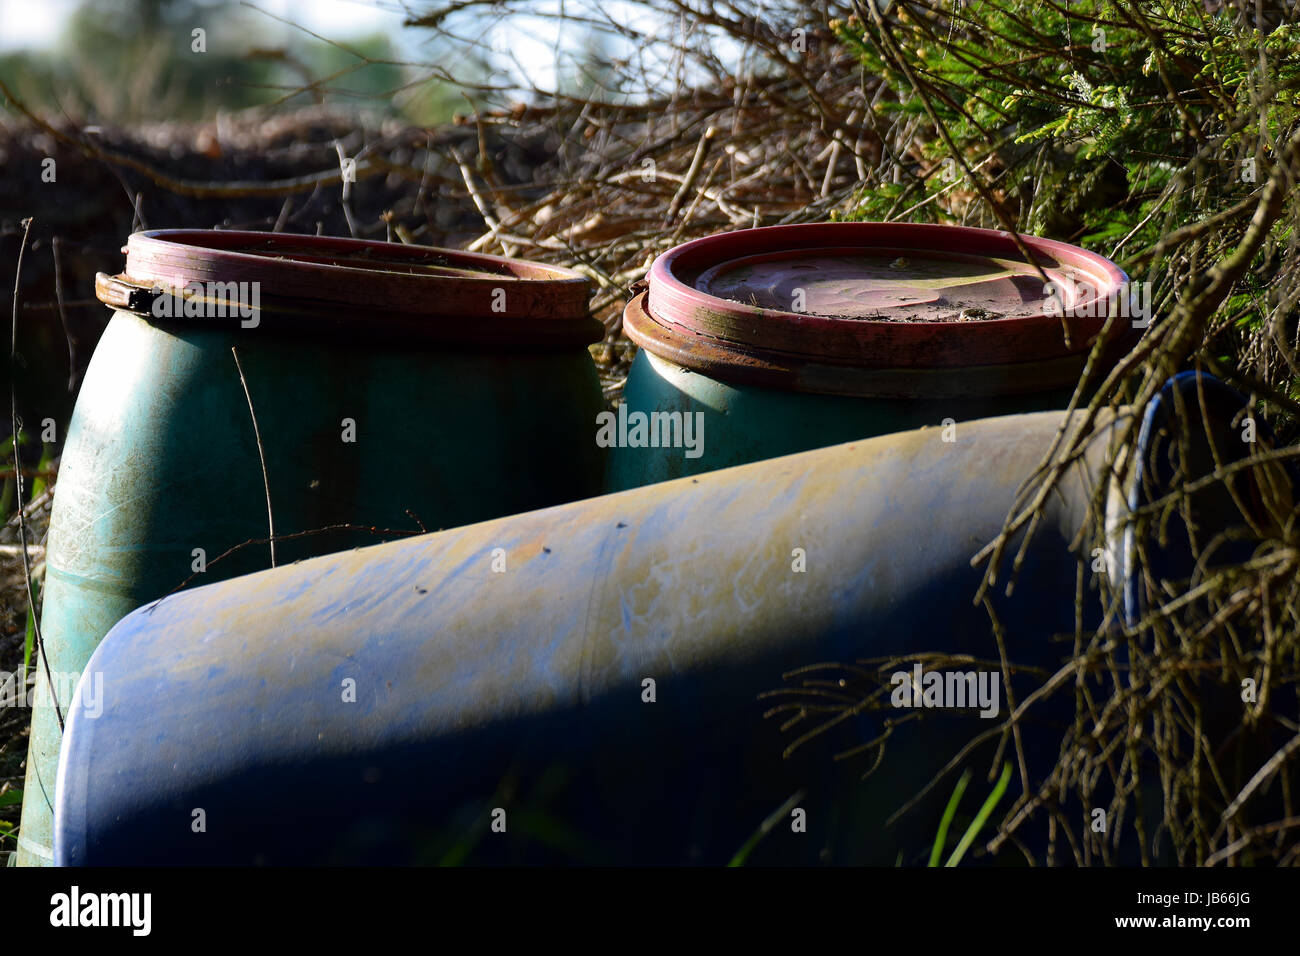 Old plastic barrels left in nature. Horizontal image Stock Photo